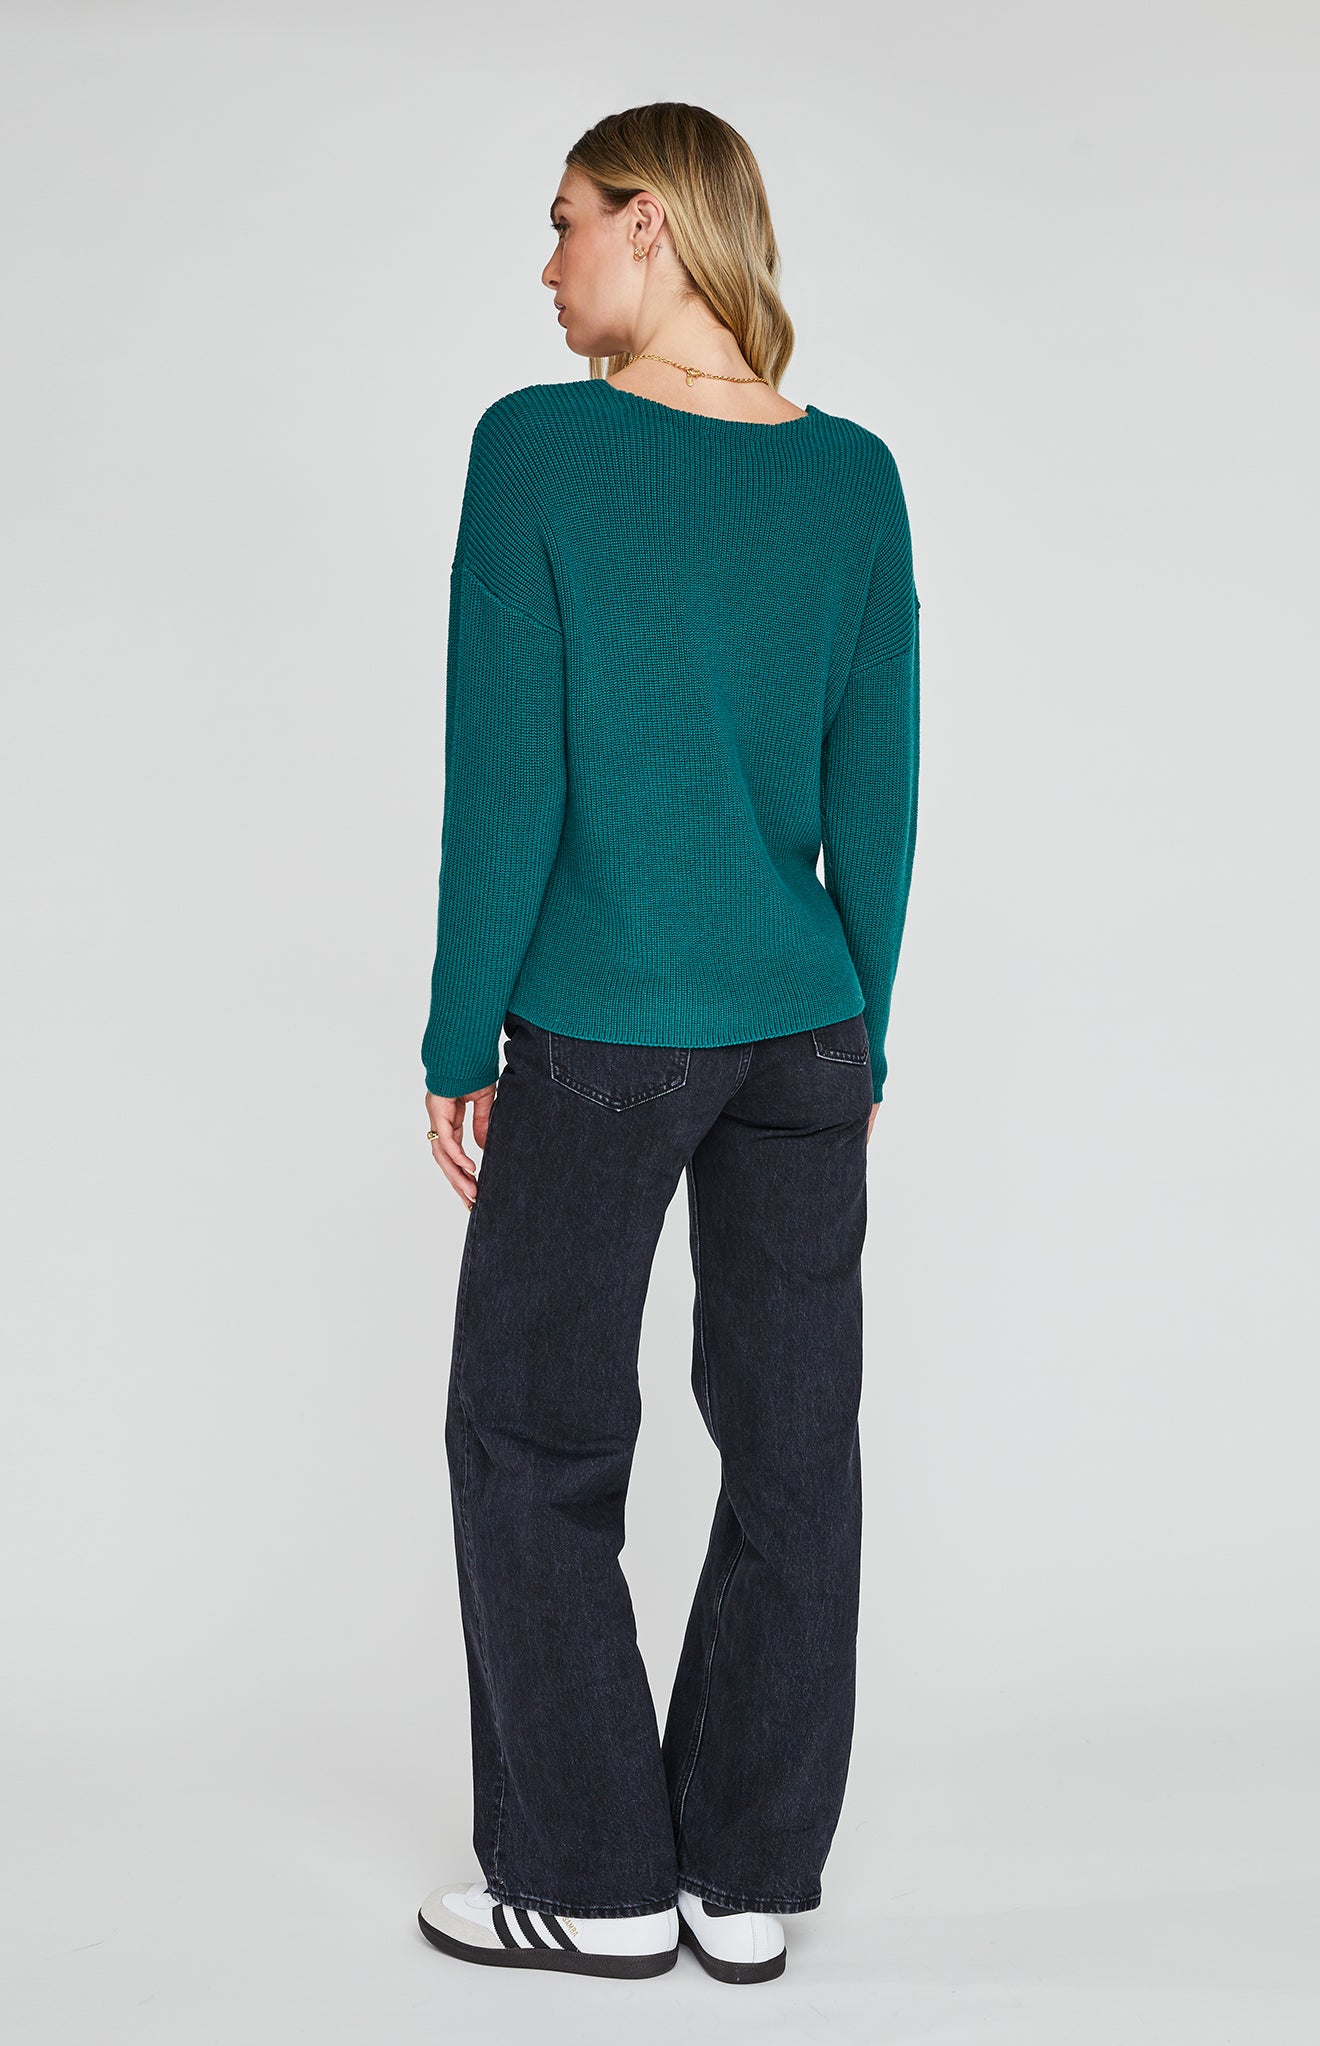 GENTLE FAWN - Tucker Sweater in Emerald Green